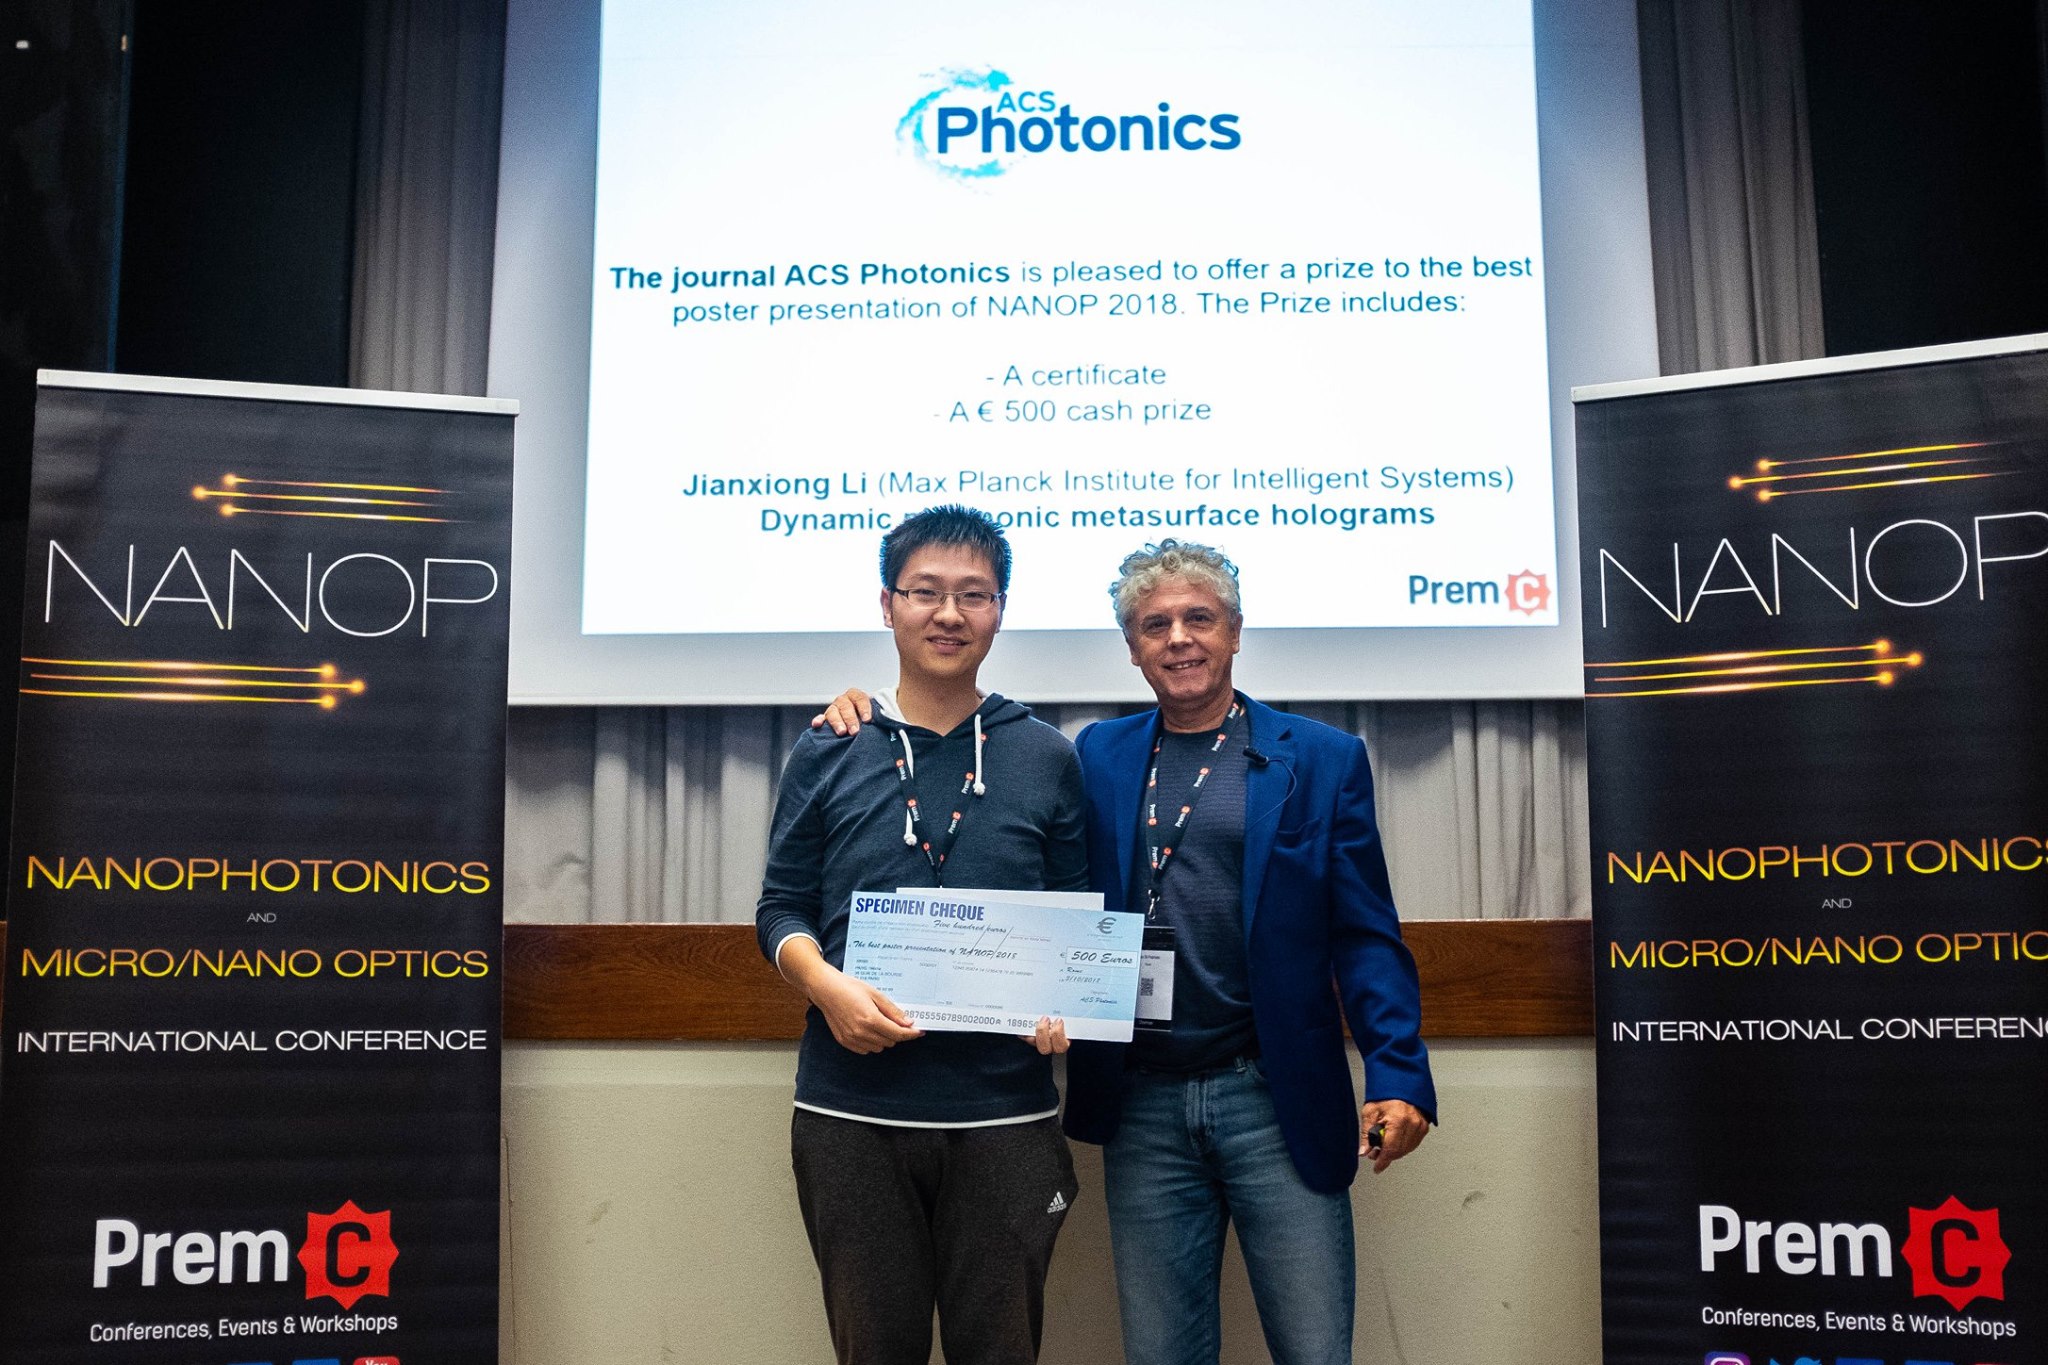 Nanophotonics and Micro/Nano Optics International Conference 2017 Auditorium